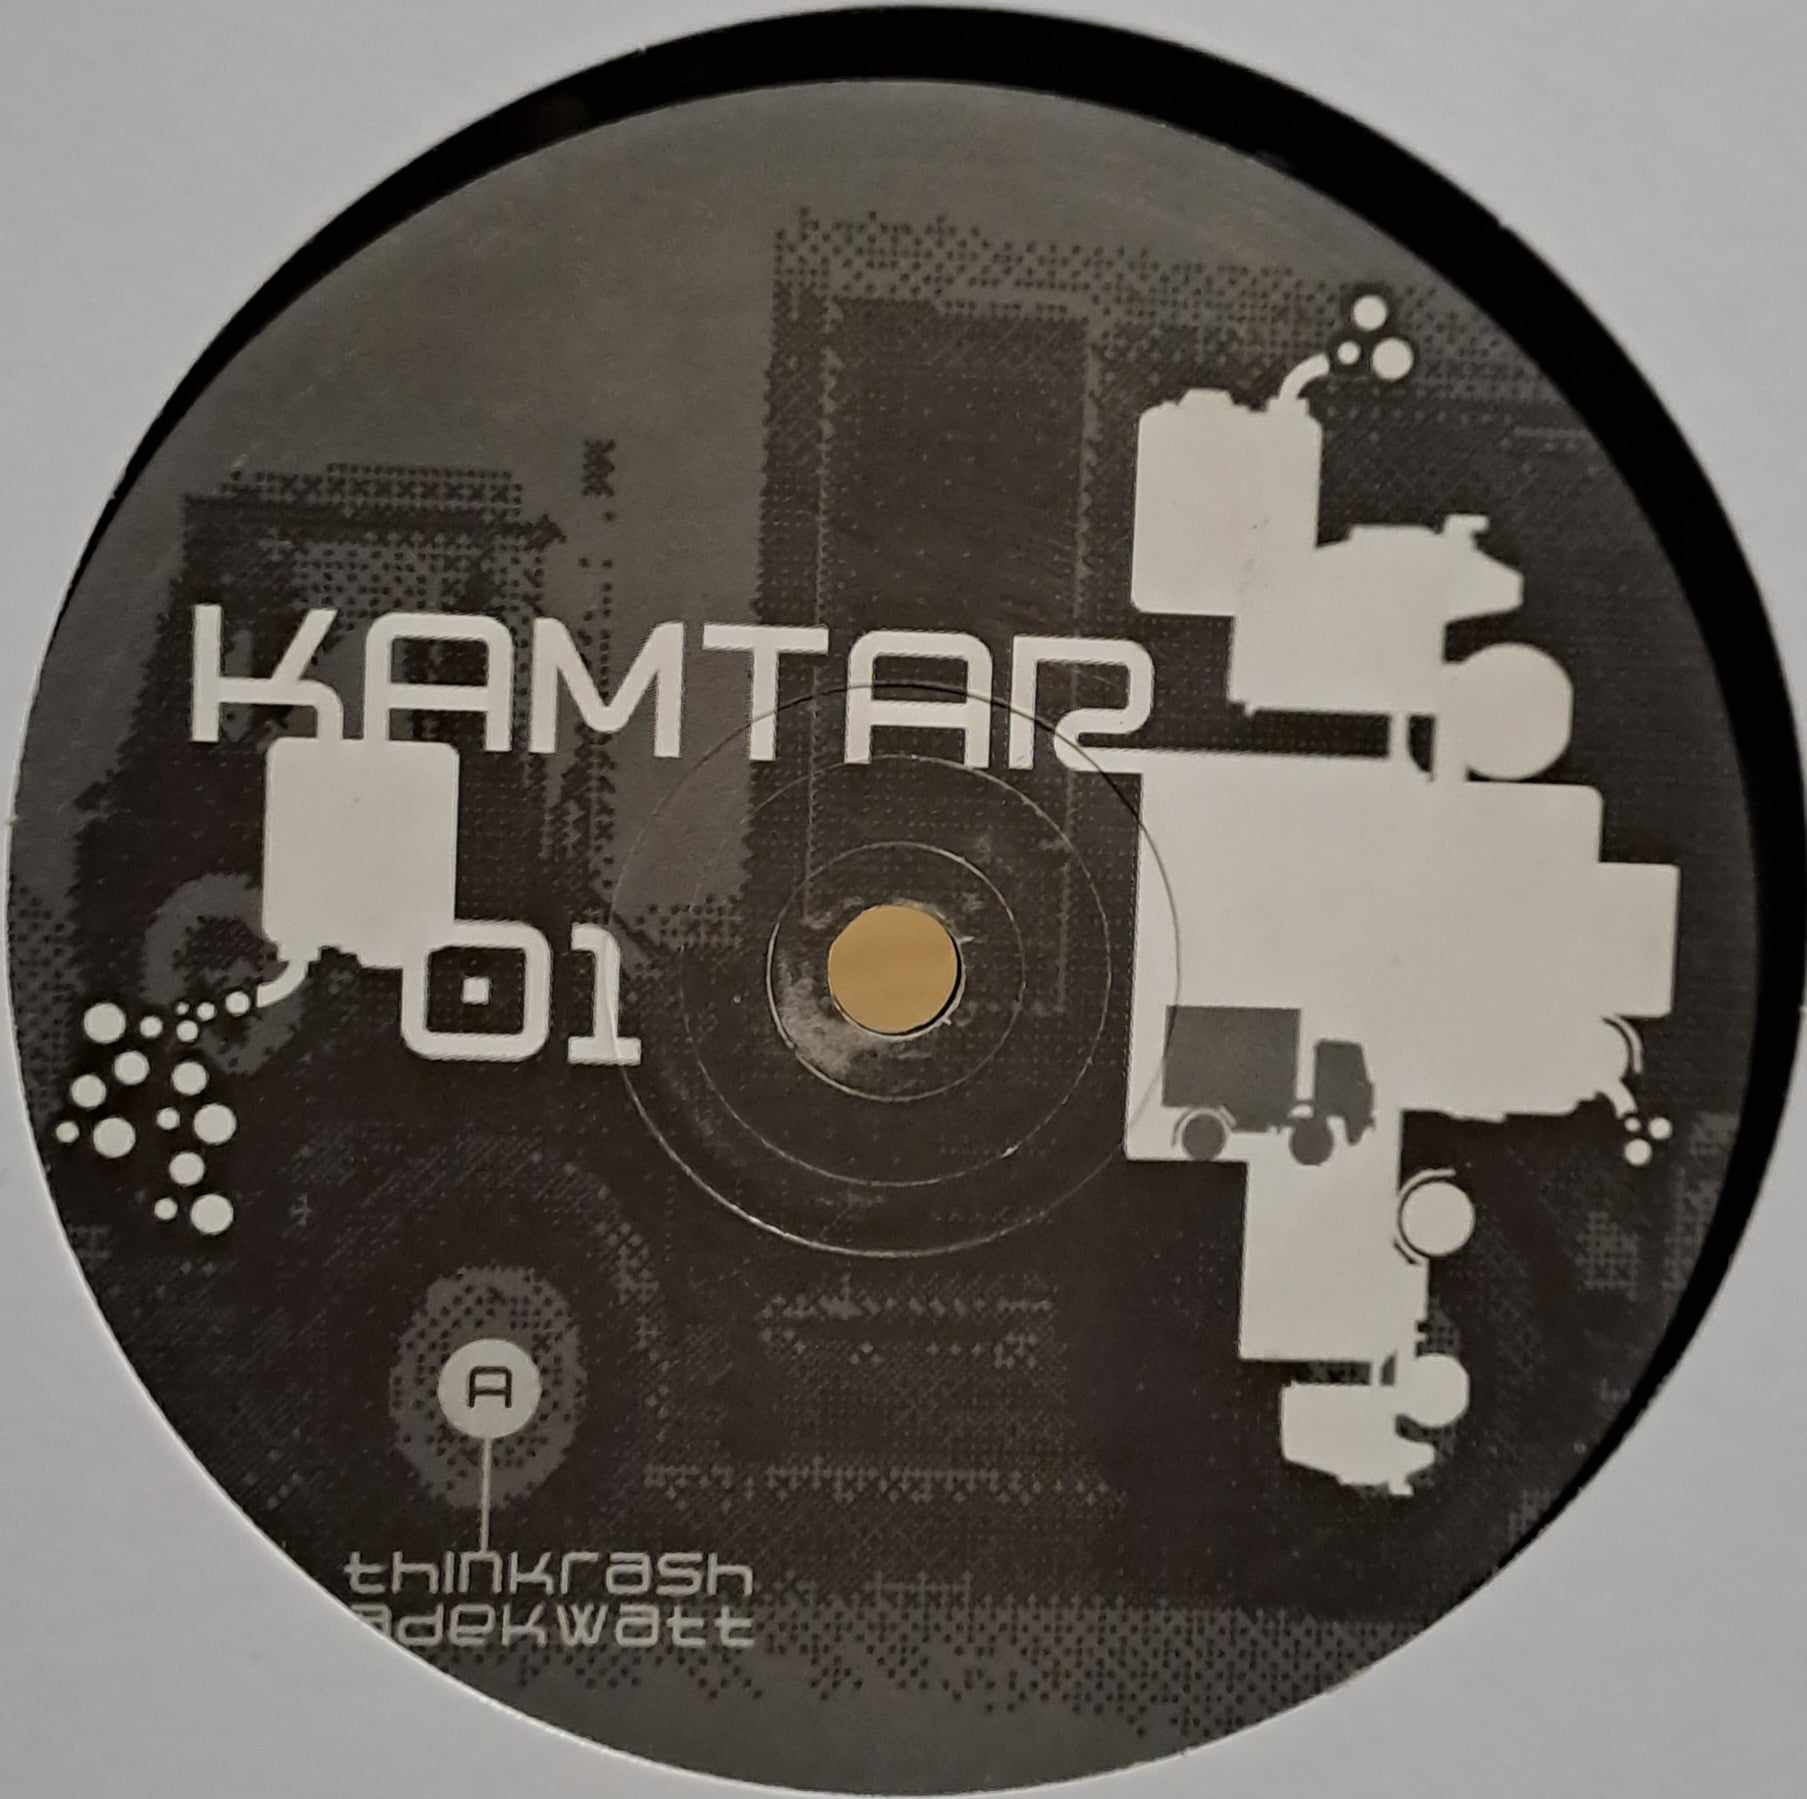 Kamtar 001 - vinyle freetekno